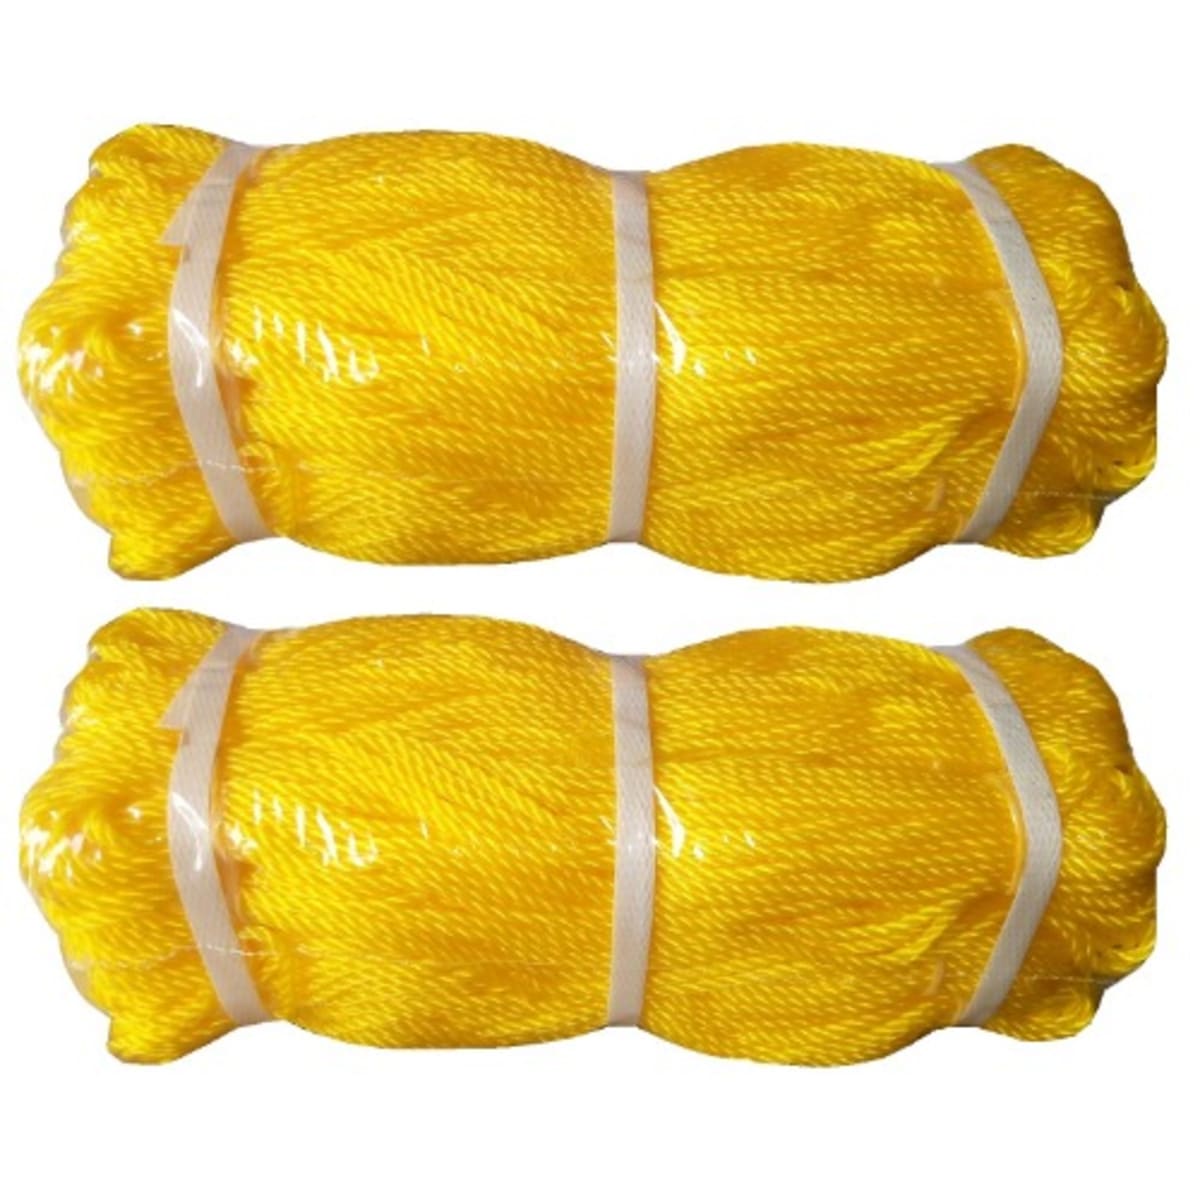 Multipurpose Nylon Washing Line Rope Pack - 2packs